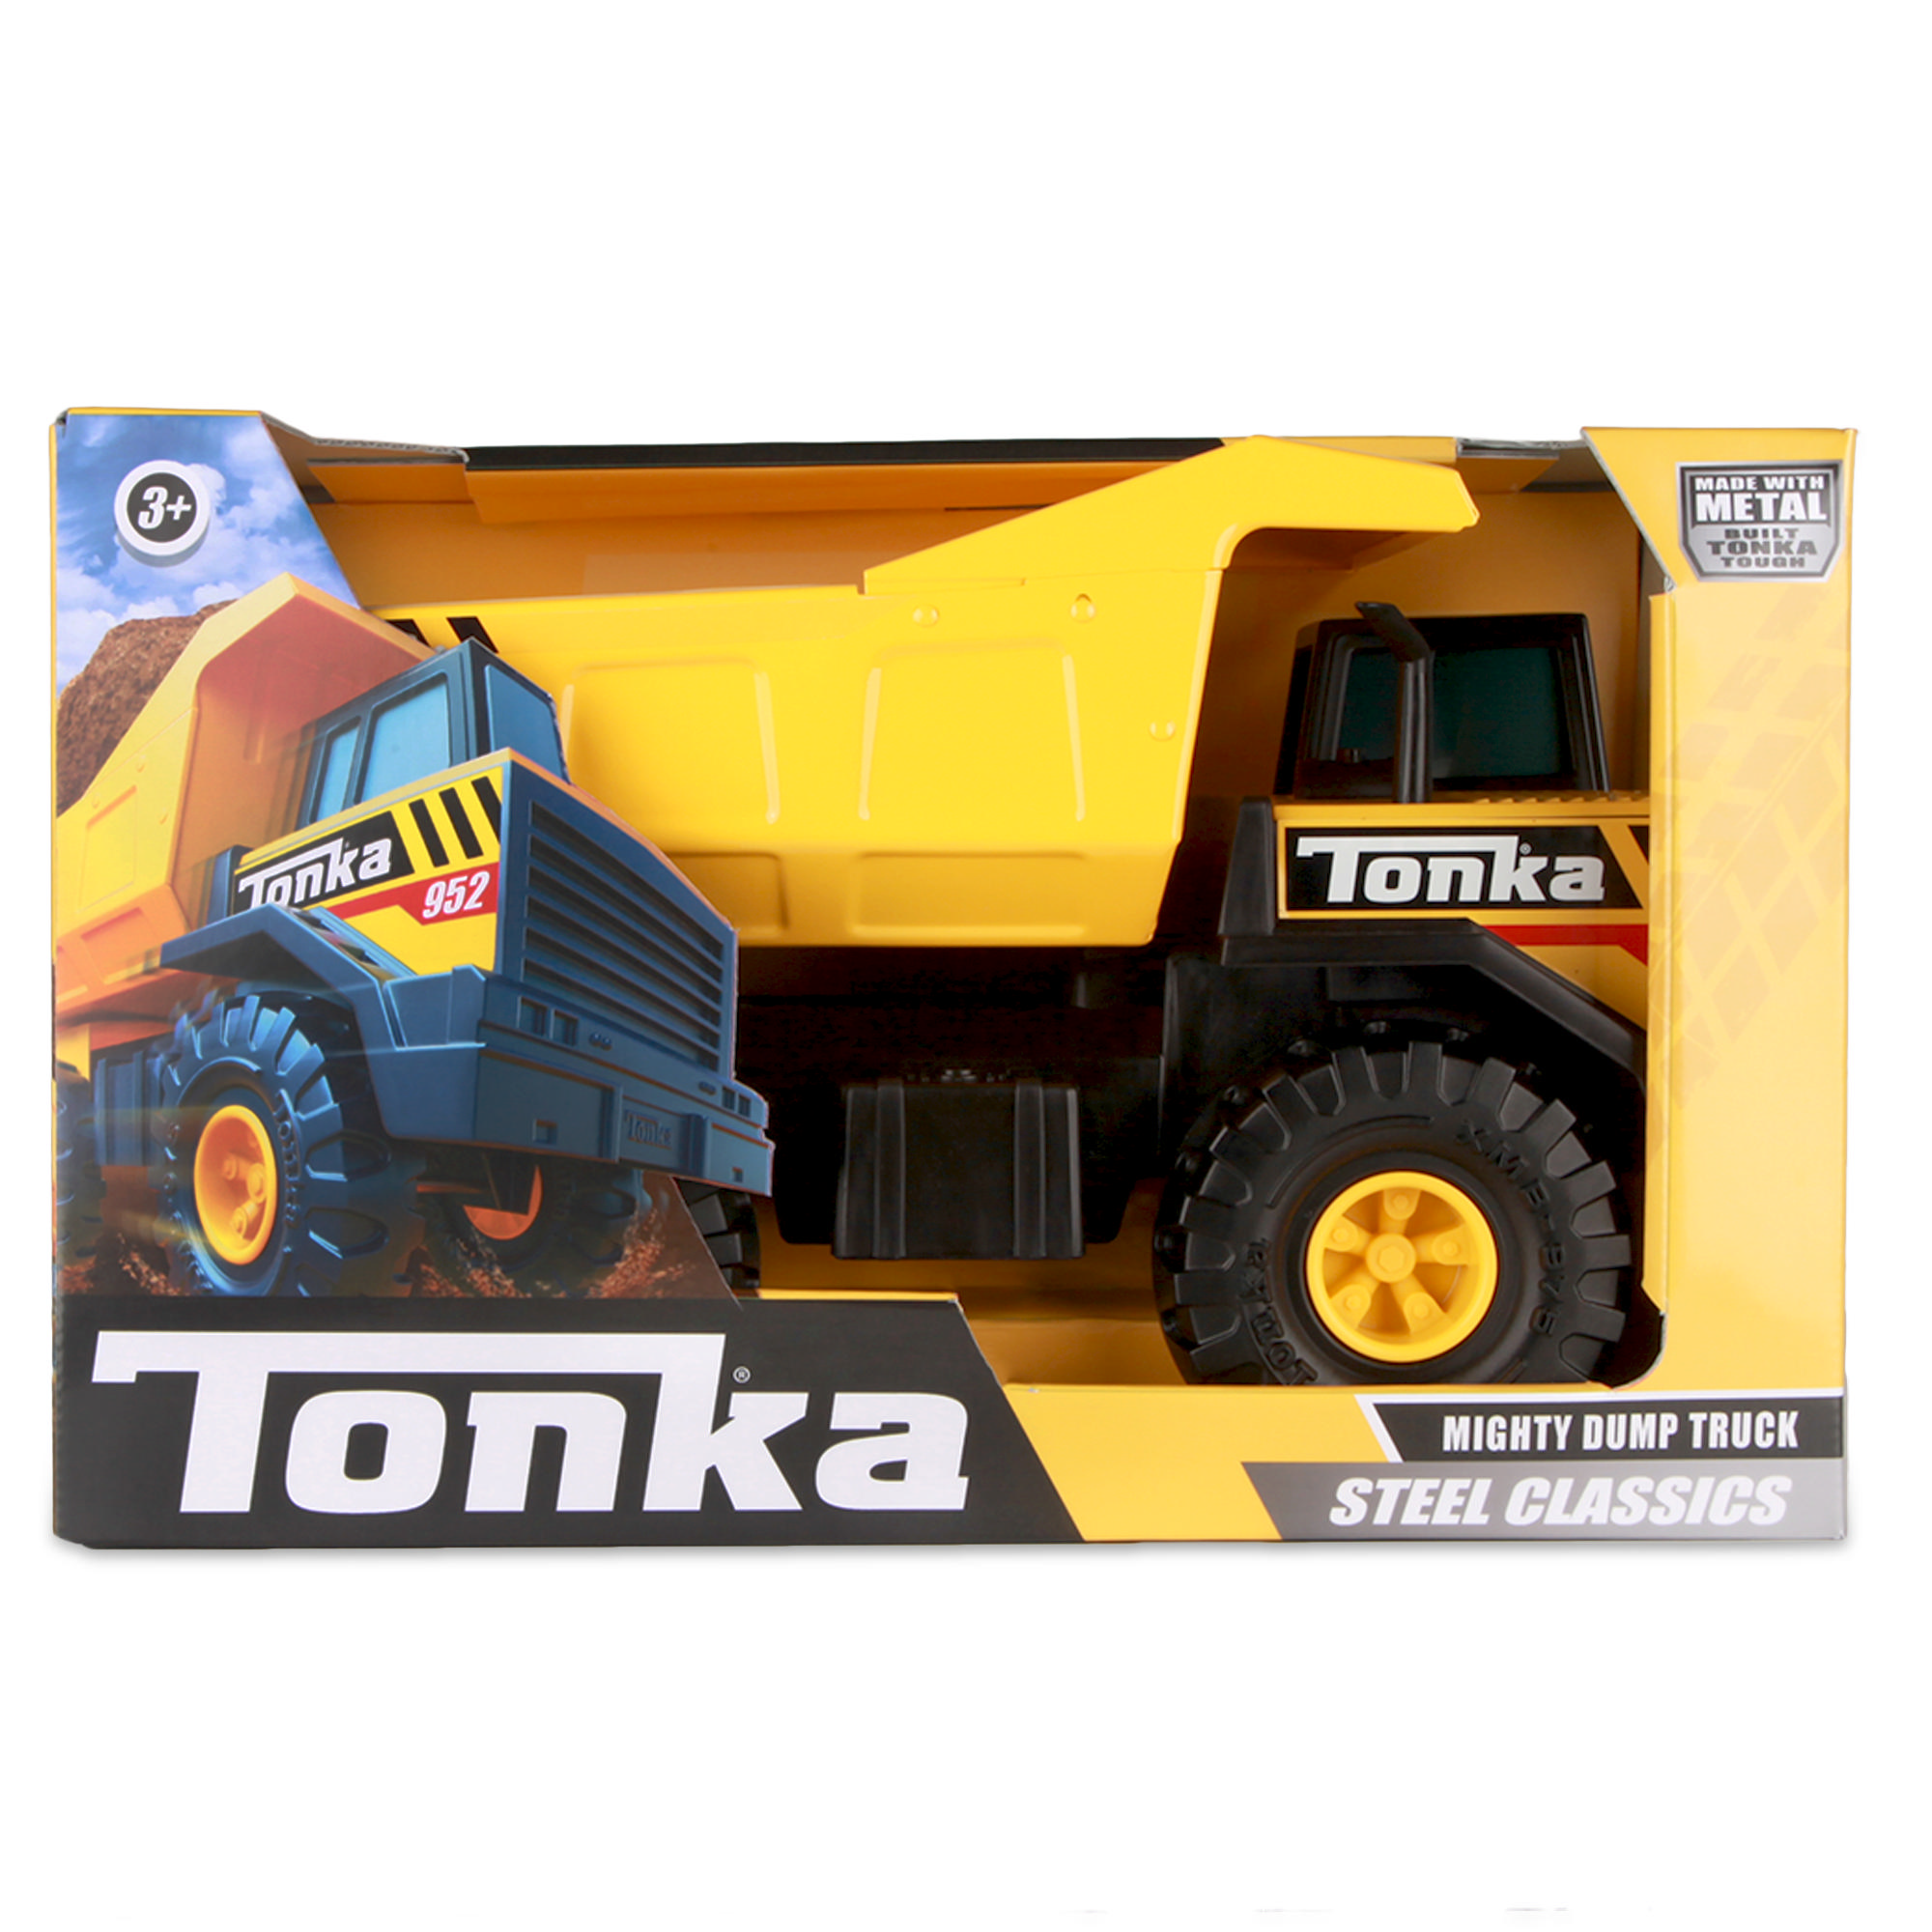 Tonka Classic Mighty Dump Truck 902050AZ01 for sale online